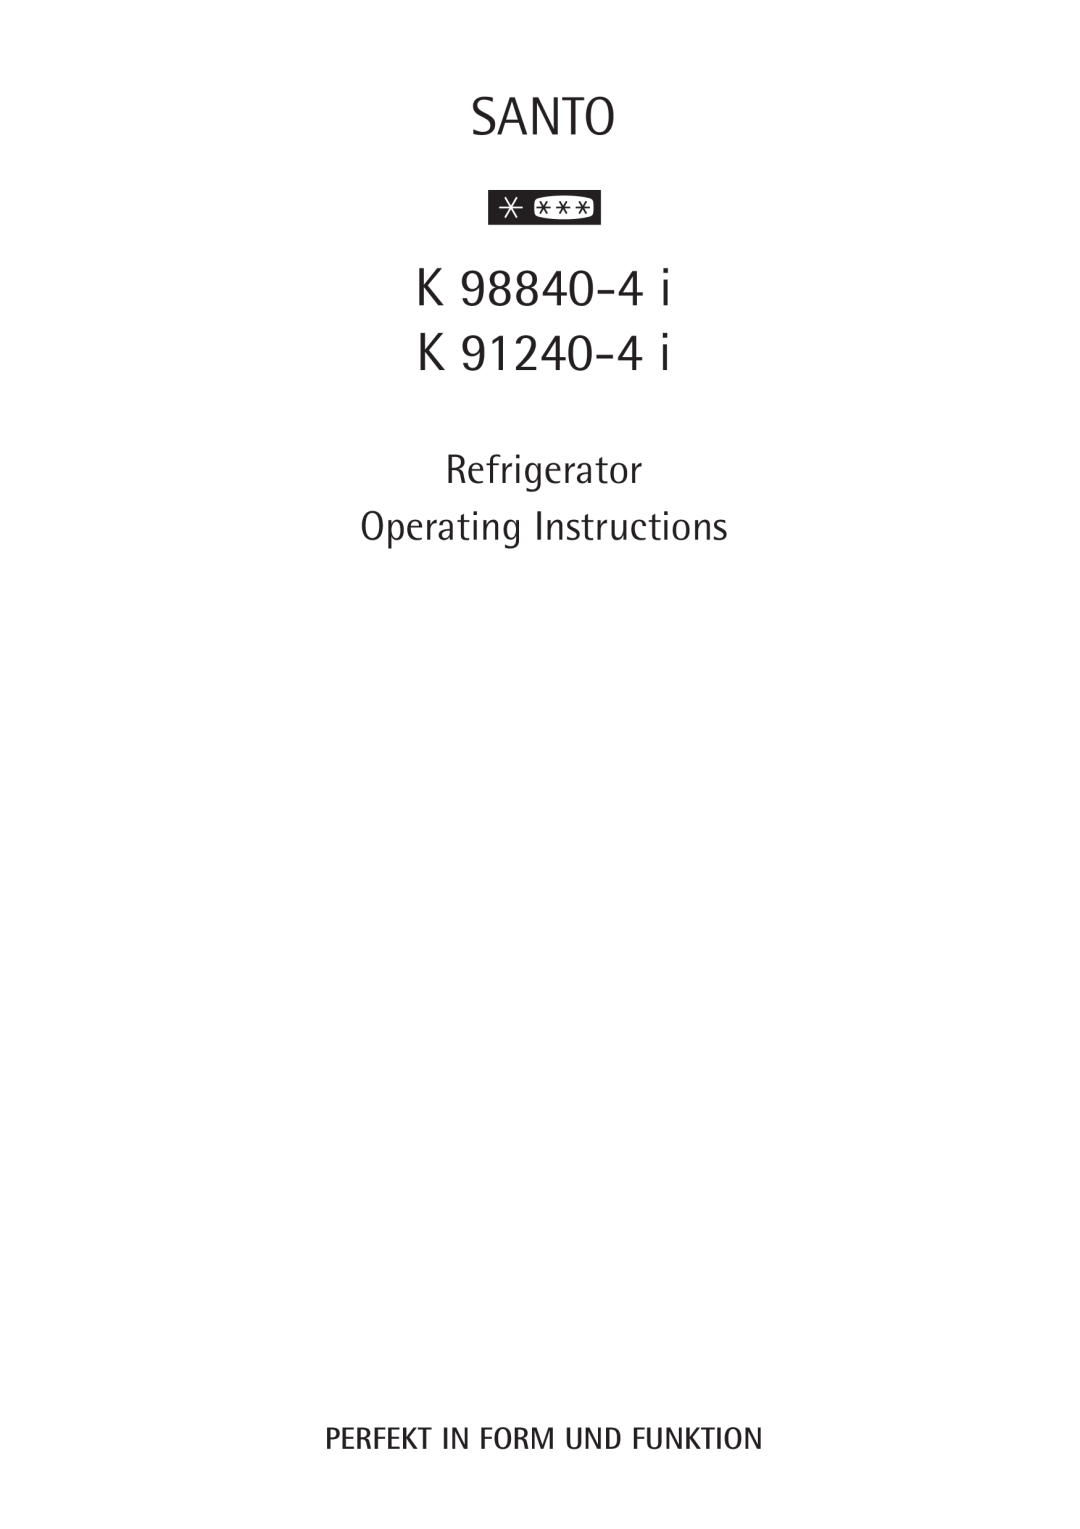 Electrolux K 91240-4 i manual SANTO K 98840-4 K 91240-4, Refrigerator Operating Instructions, Perfekt In Form Und Funktion 